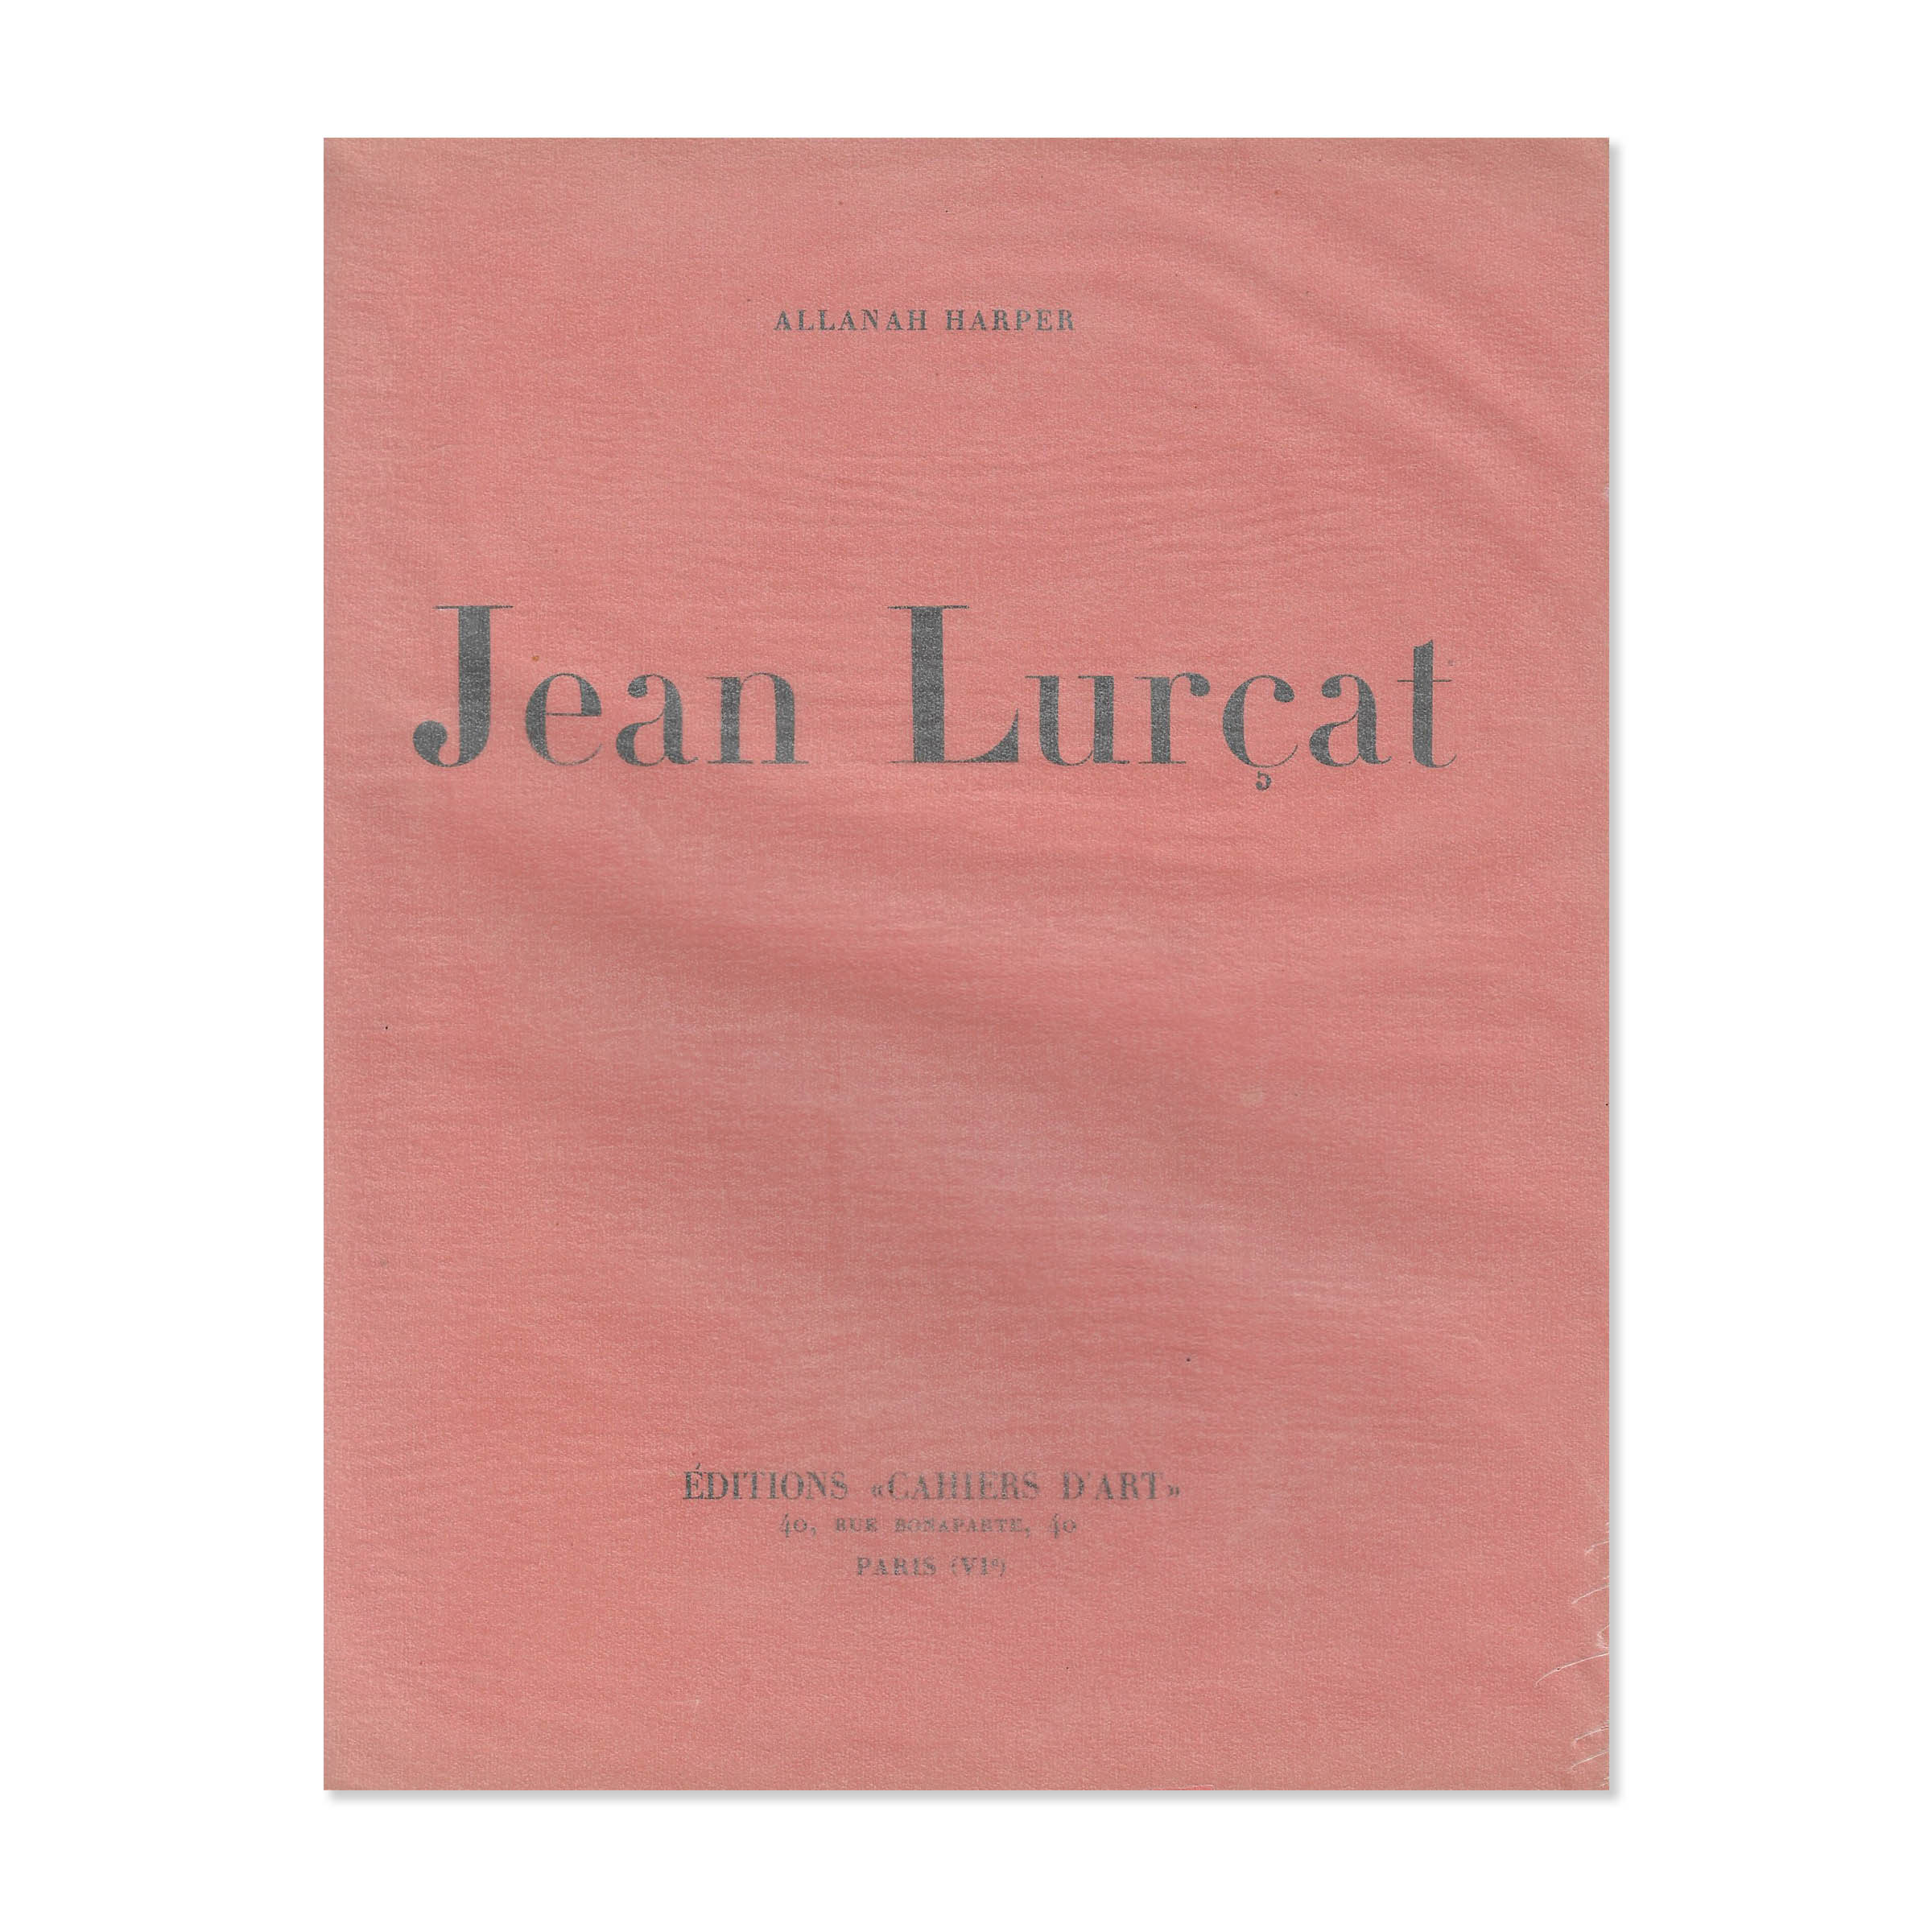 Jean Lurçat. Cover view